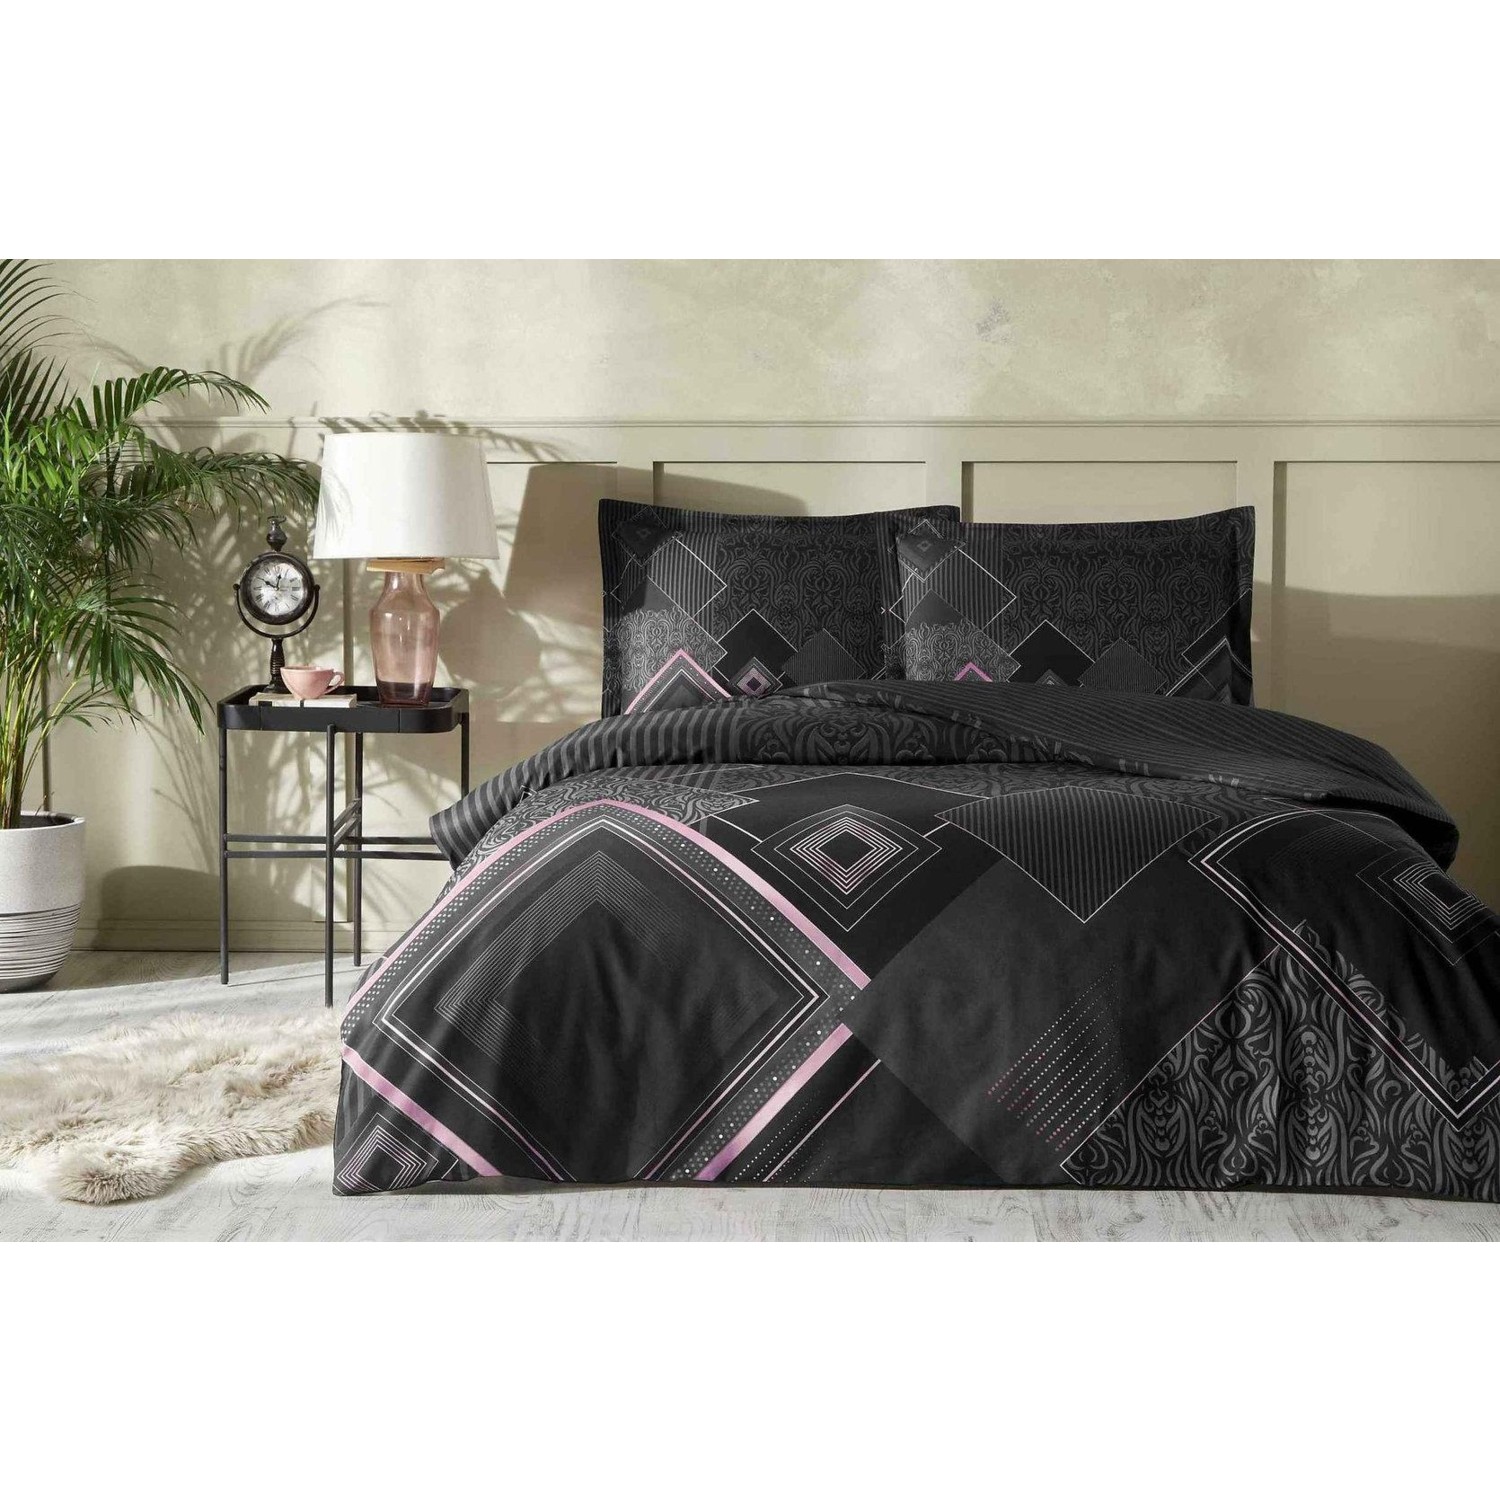 Комплект постельного белья Ozdilek Snazzy Black Pink King Size firon siyah cilt babet